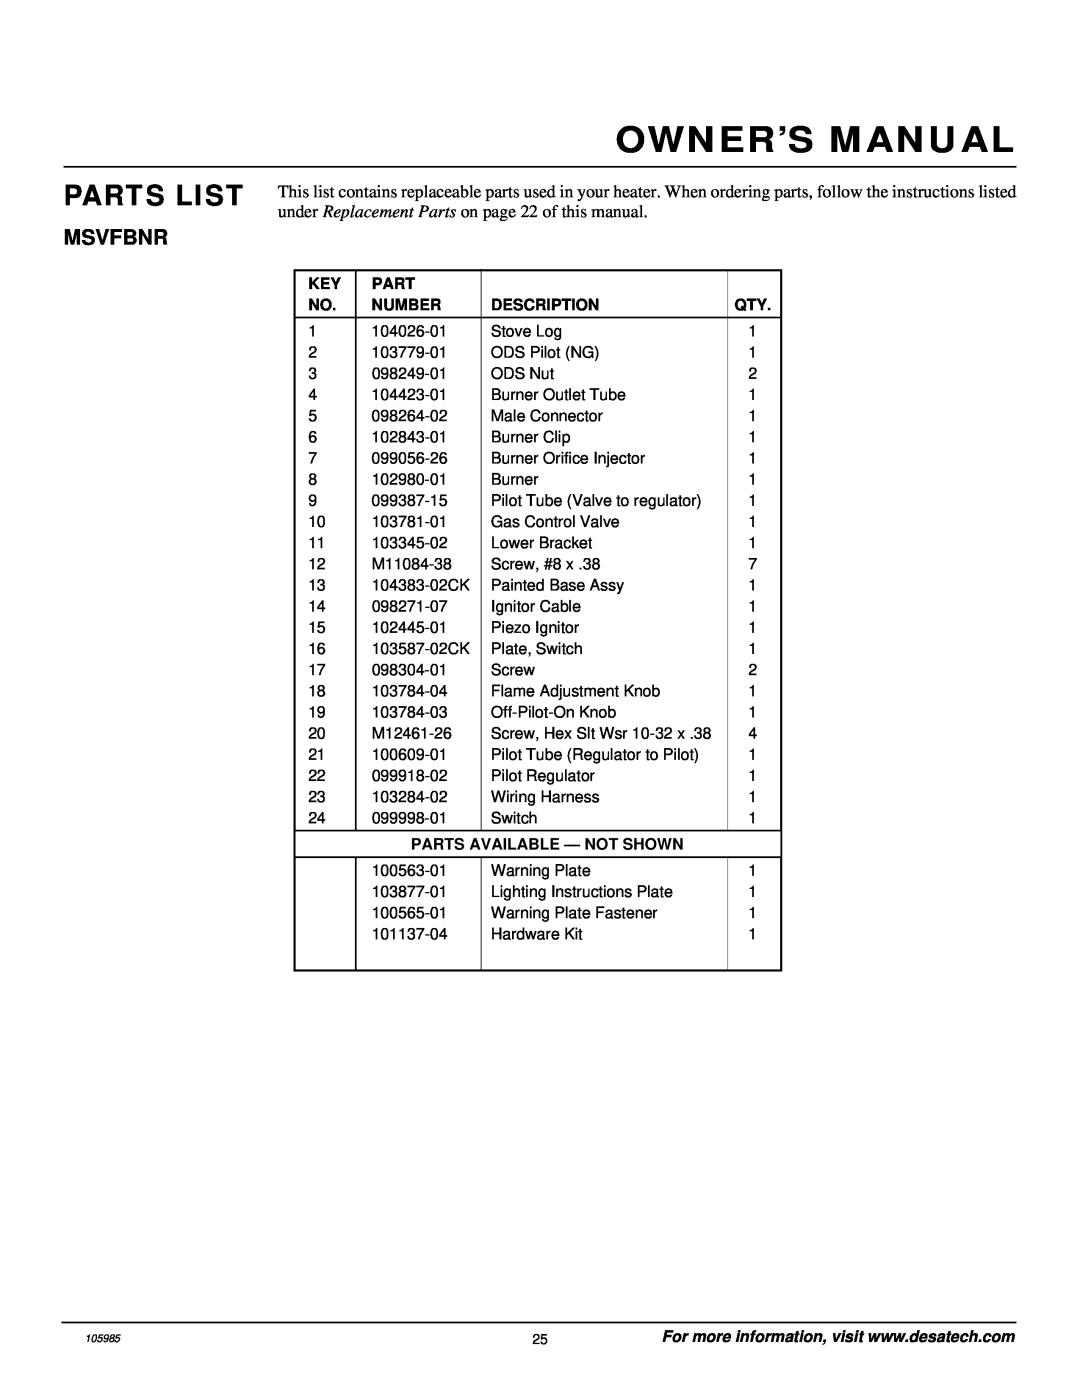 Desa MSVFBNR Series Parts List, Owner’S Manual, Msvfbnr, Number, Description, Parts Available — Not Shown 